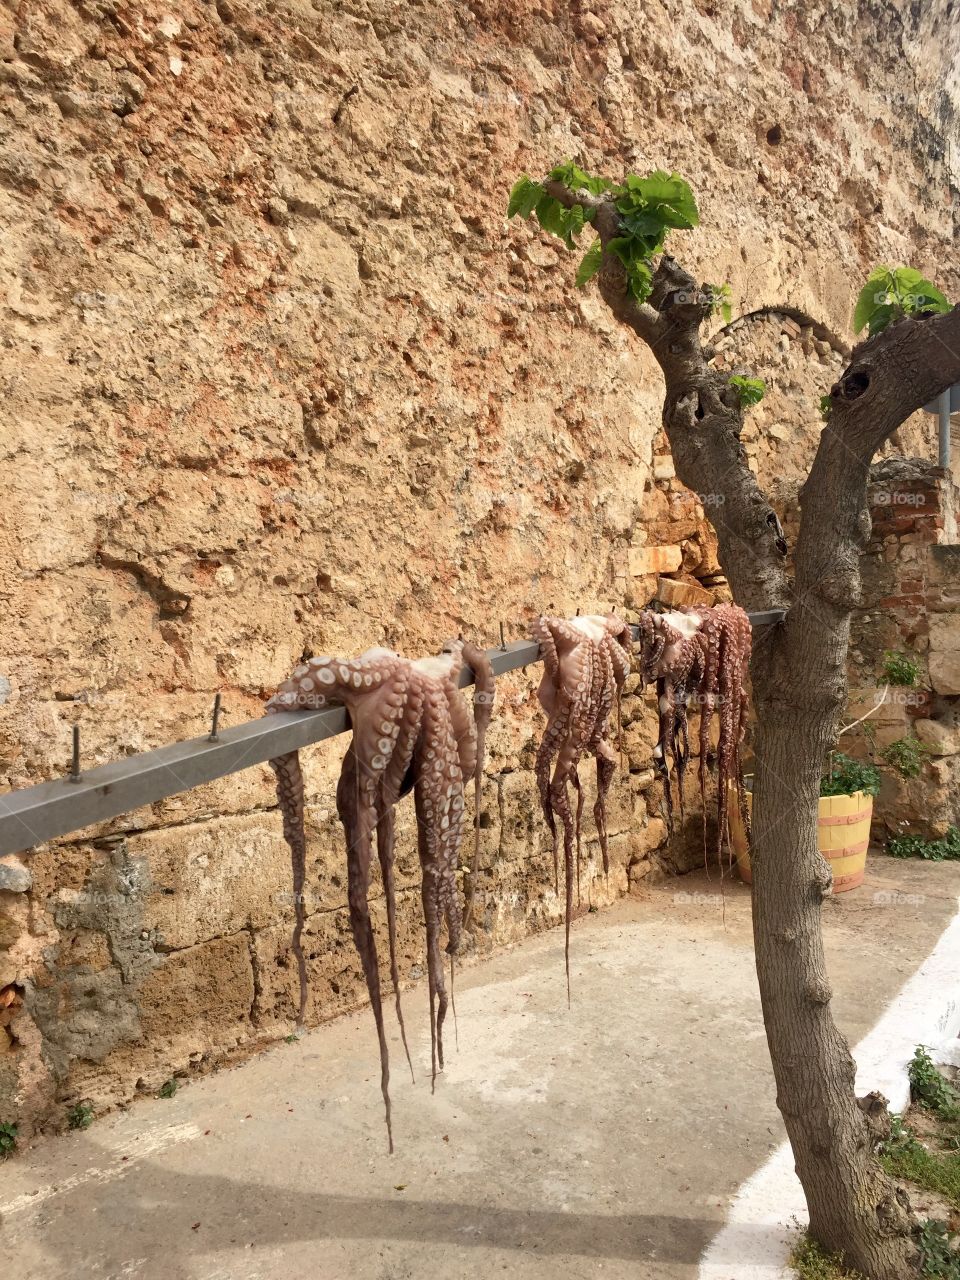 Drying octopus 